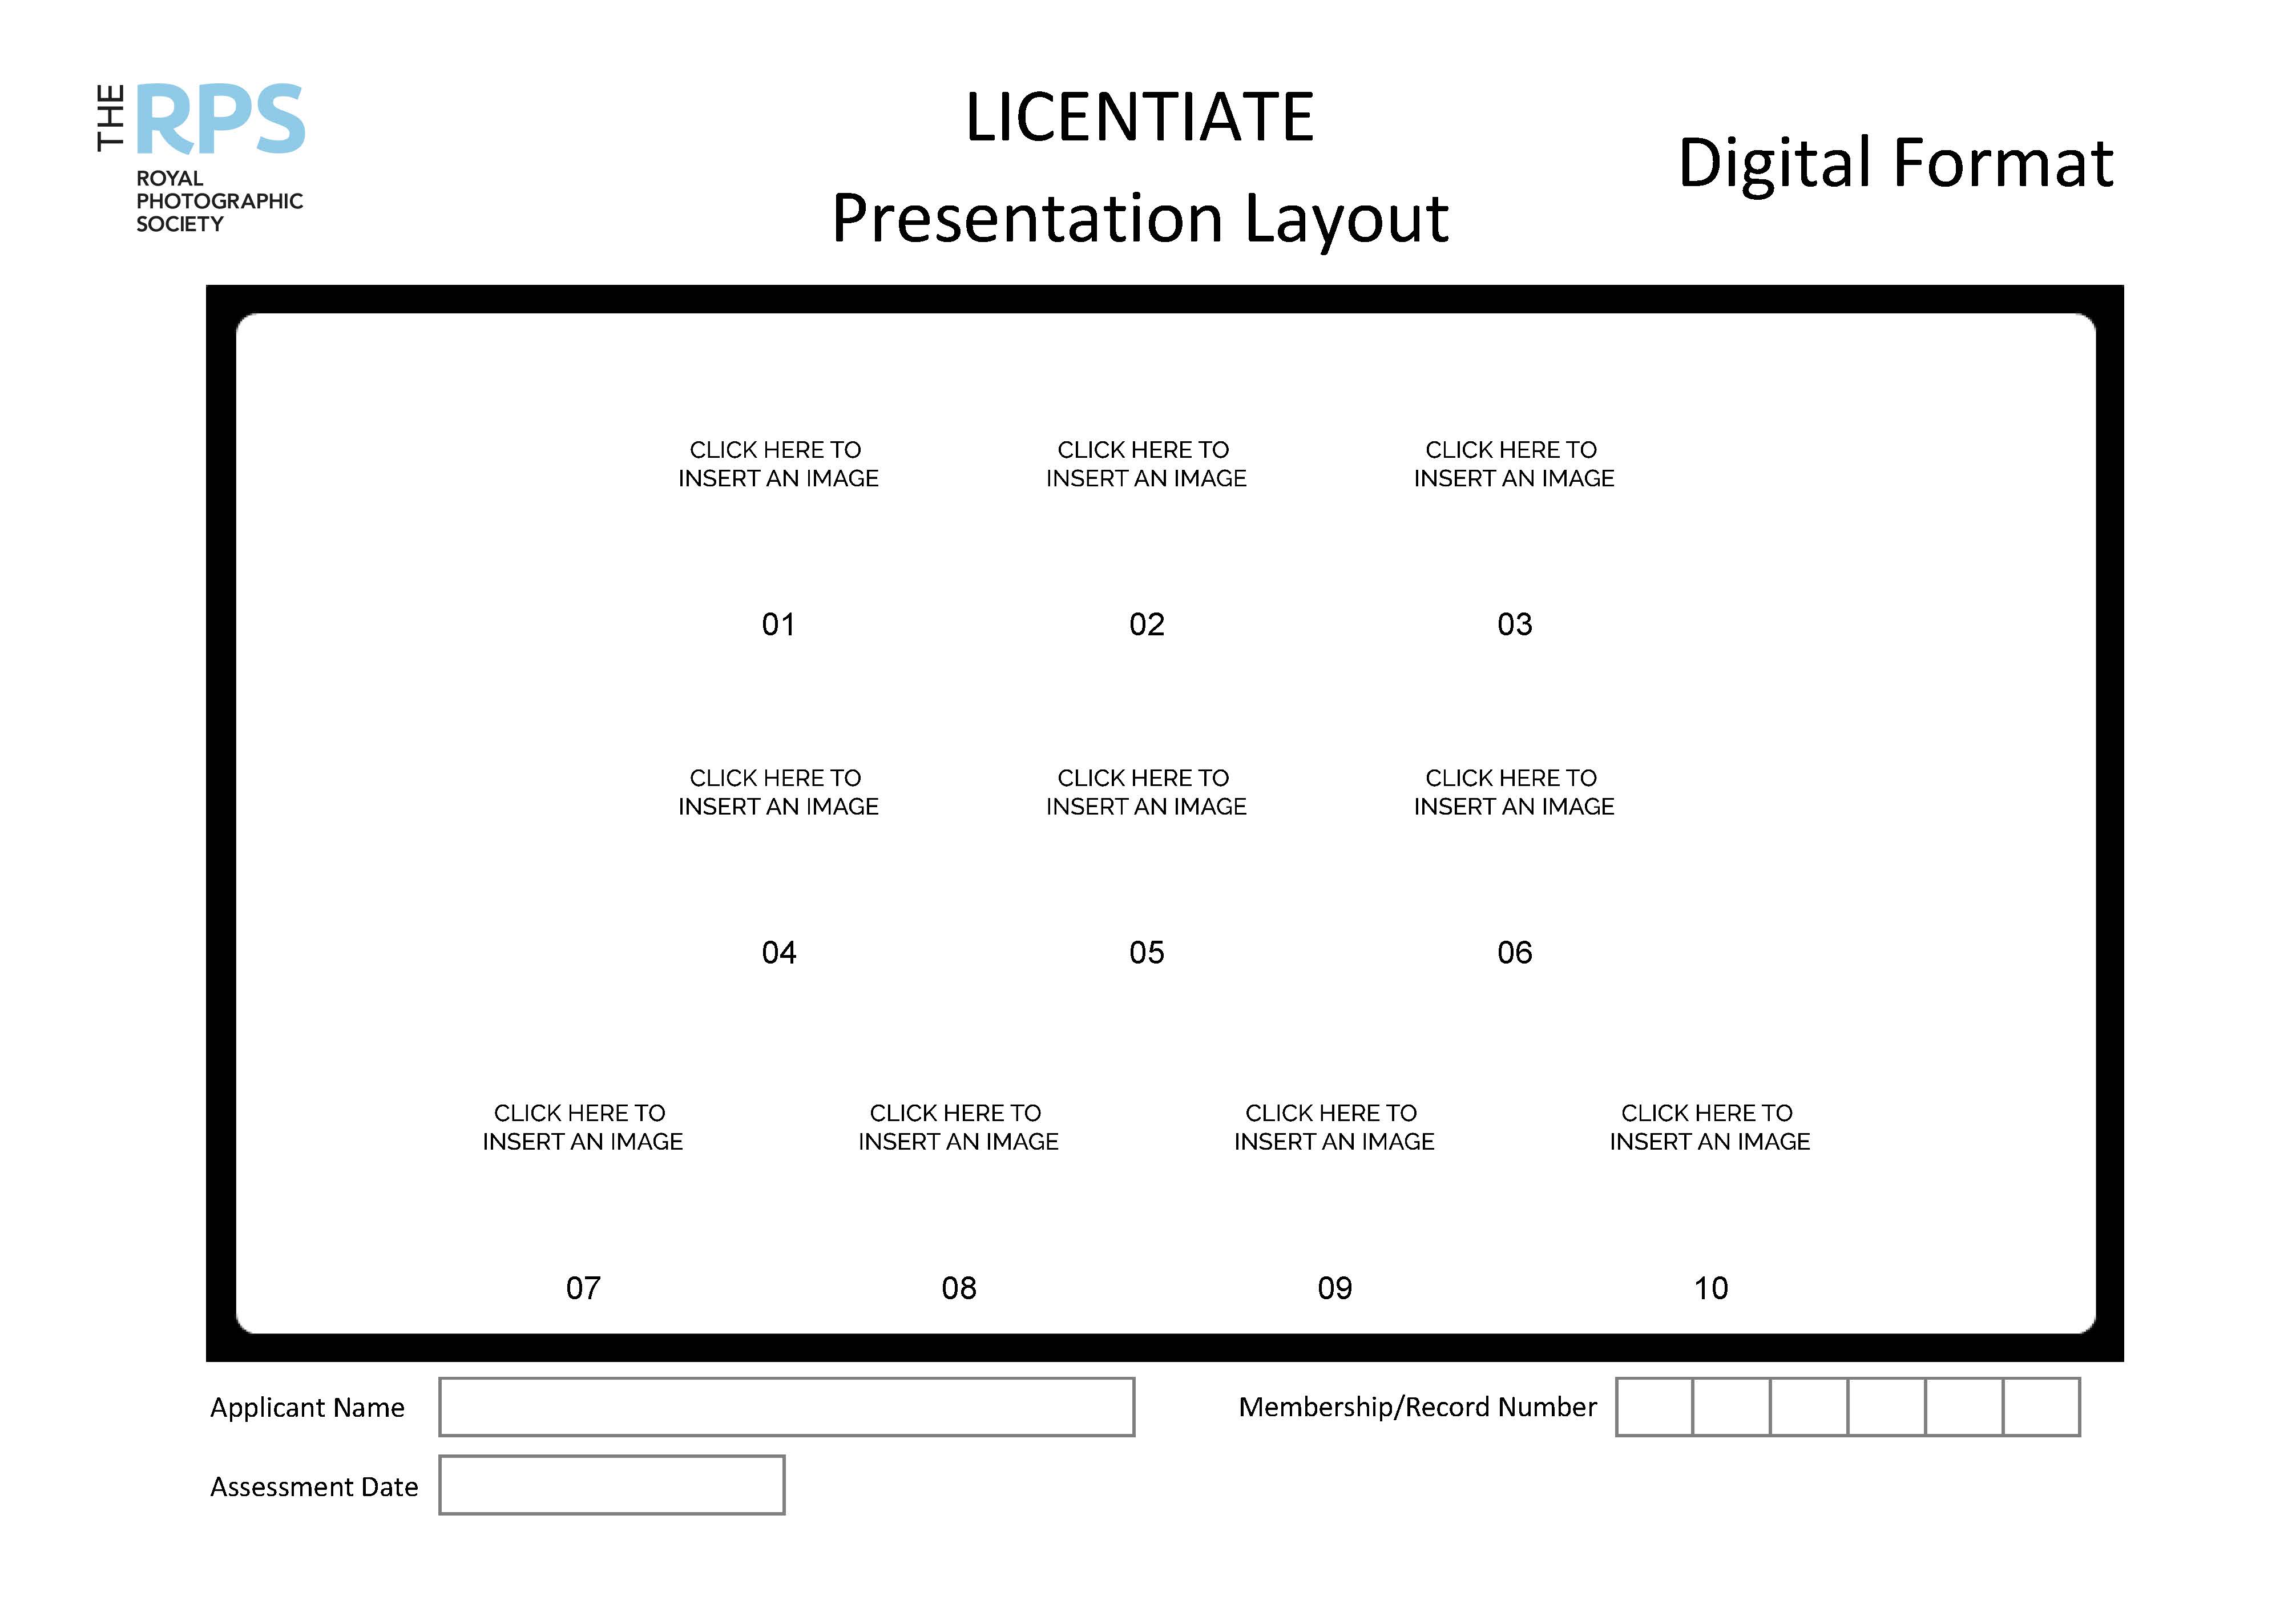 LRPS 2021 Presentation Layout 3 3 4 DIGITAL